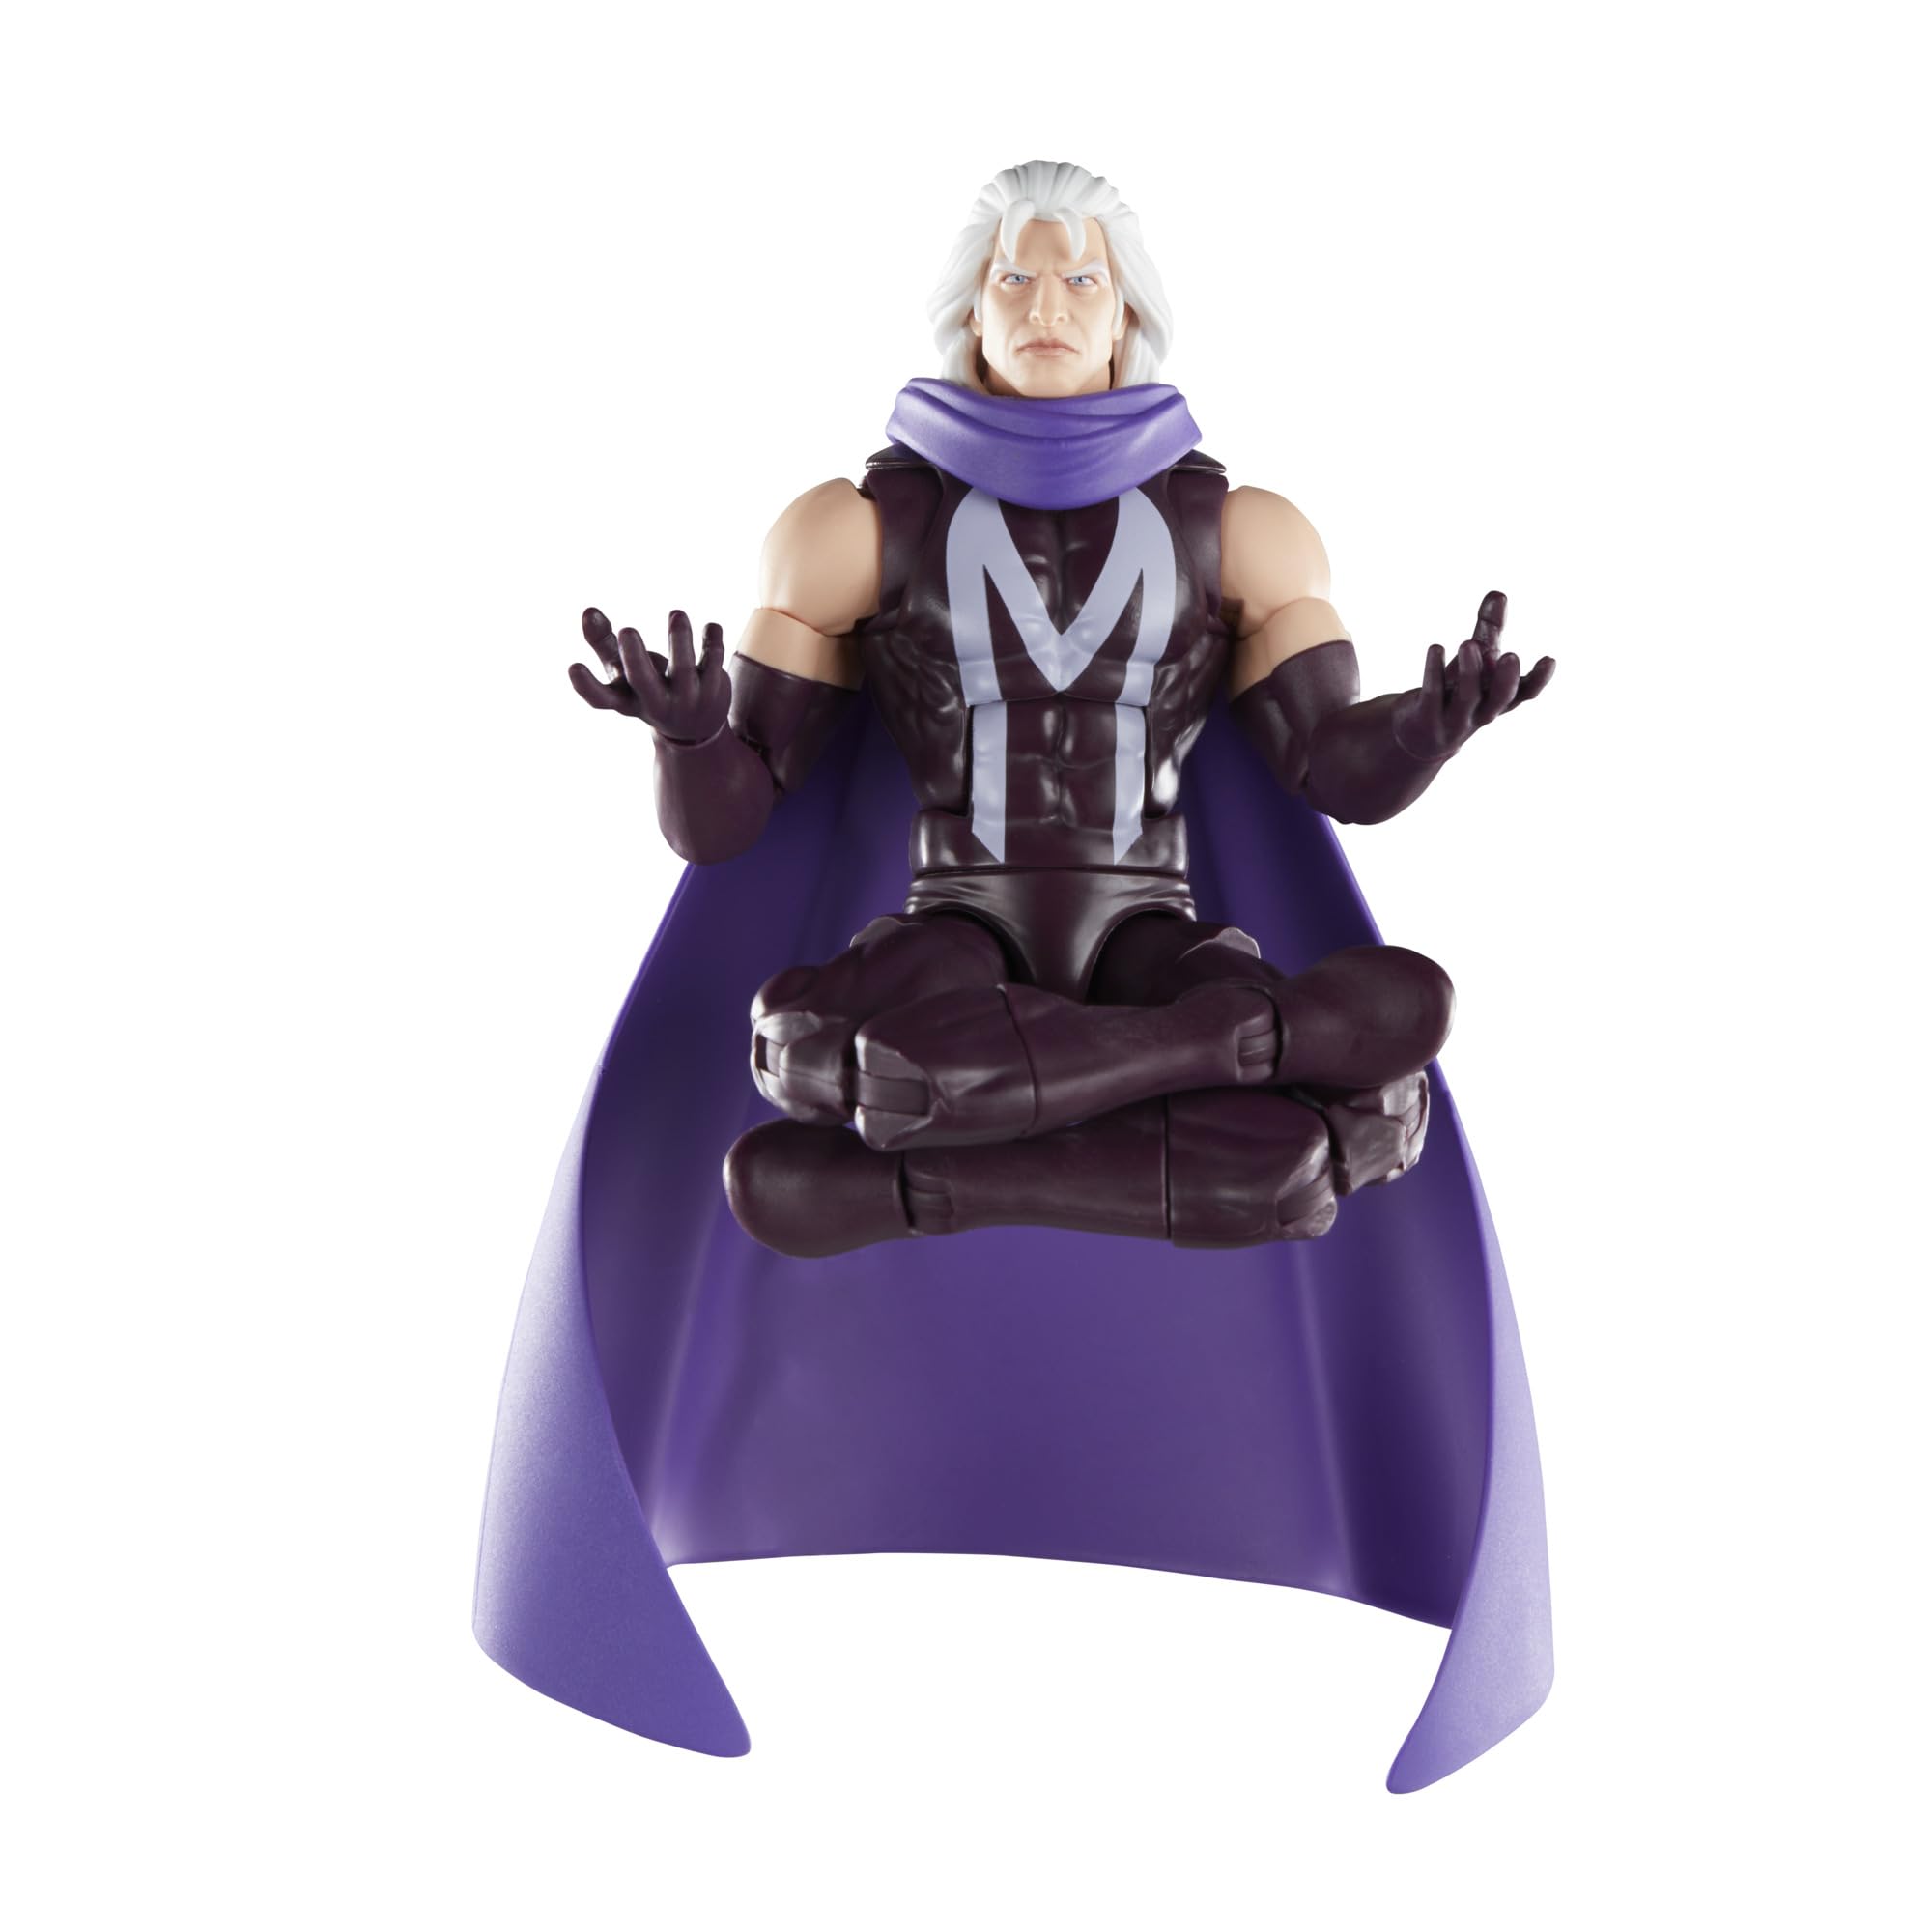 Marvel Legends Series Magneto, X-Men ‘97 Collectible 6-Inch Action Figure